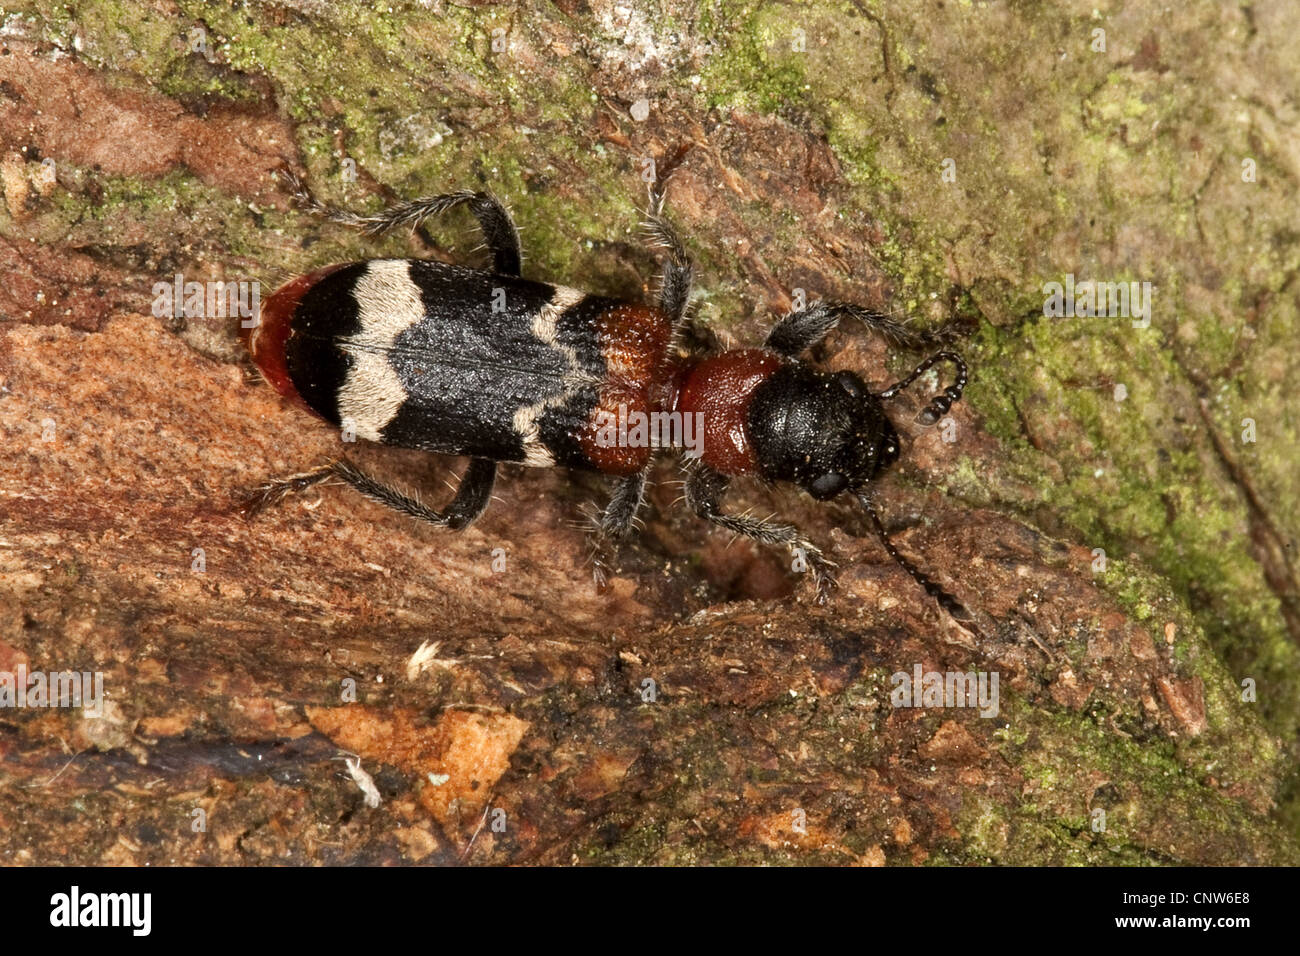 ant beetle (Thanasimus formicarius), sitting on bark, Germany Stock Photo